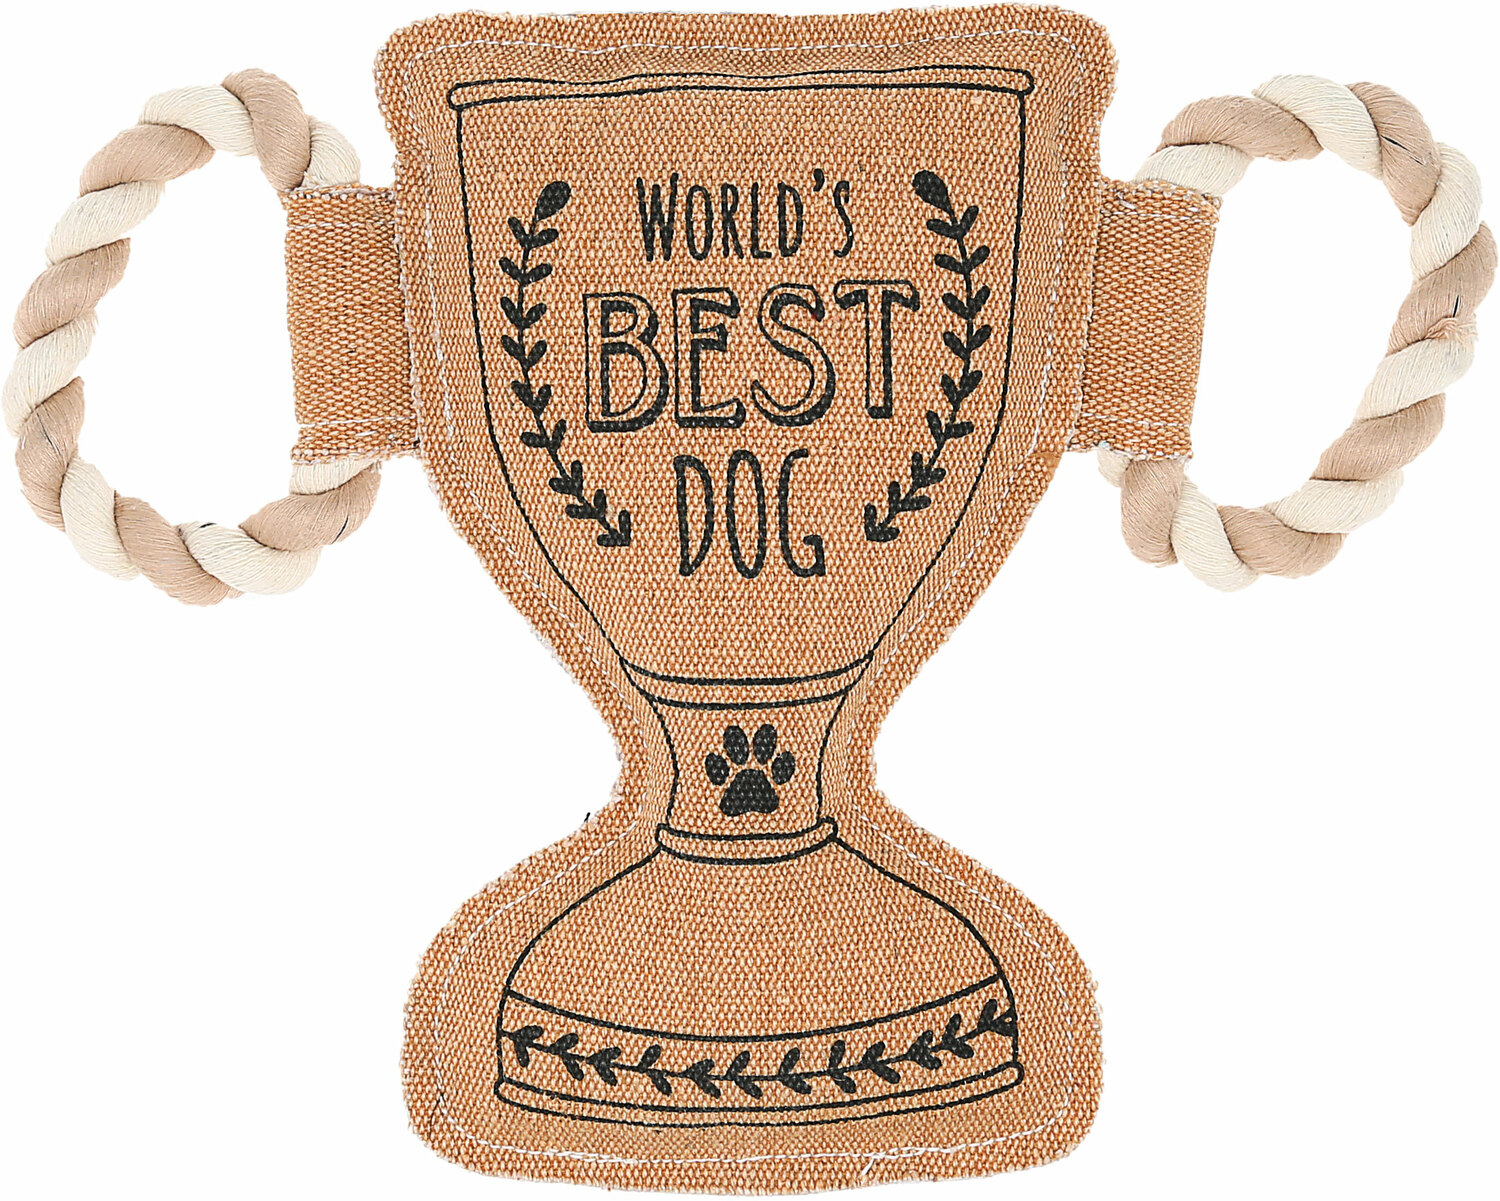 World's Best Dog by Pavilion's Pets - World's Best Dog - 11.25" Canvas Dog Toy on Rope